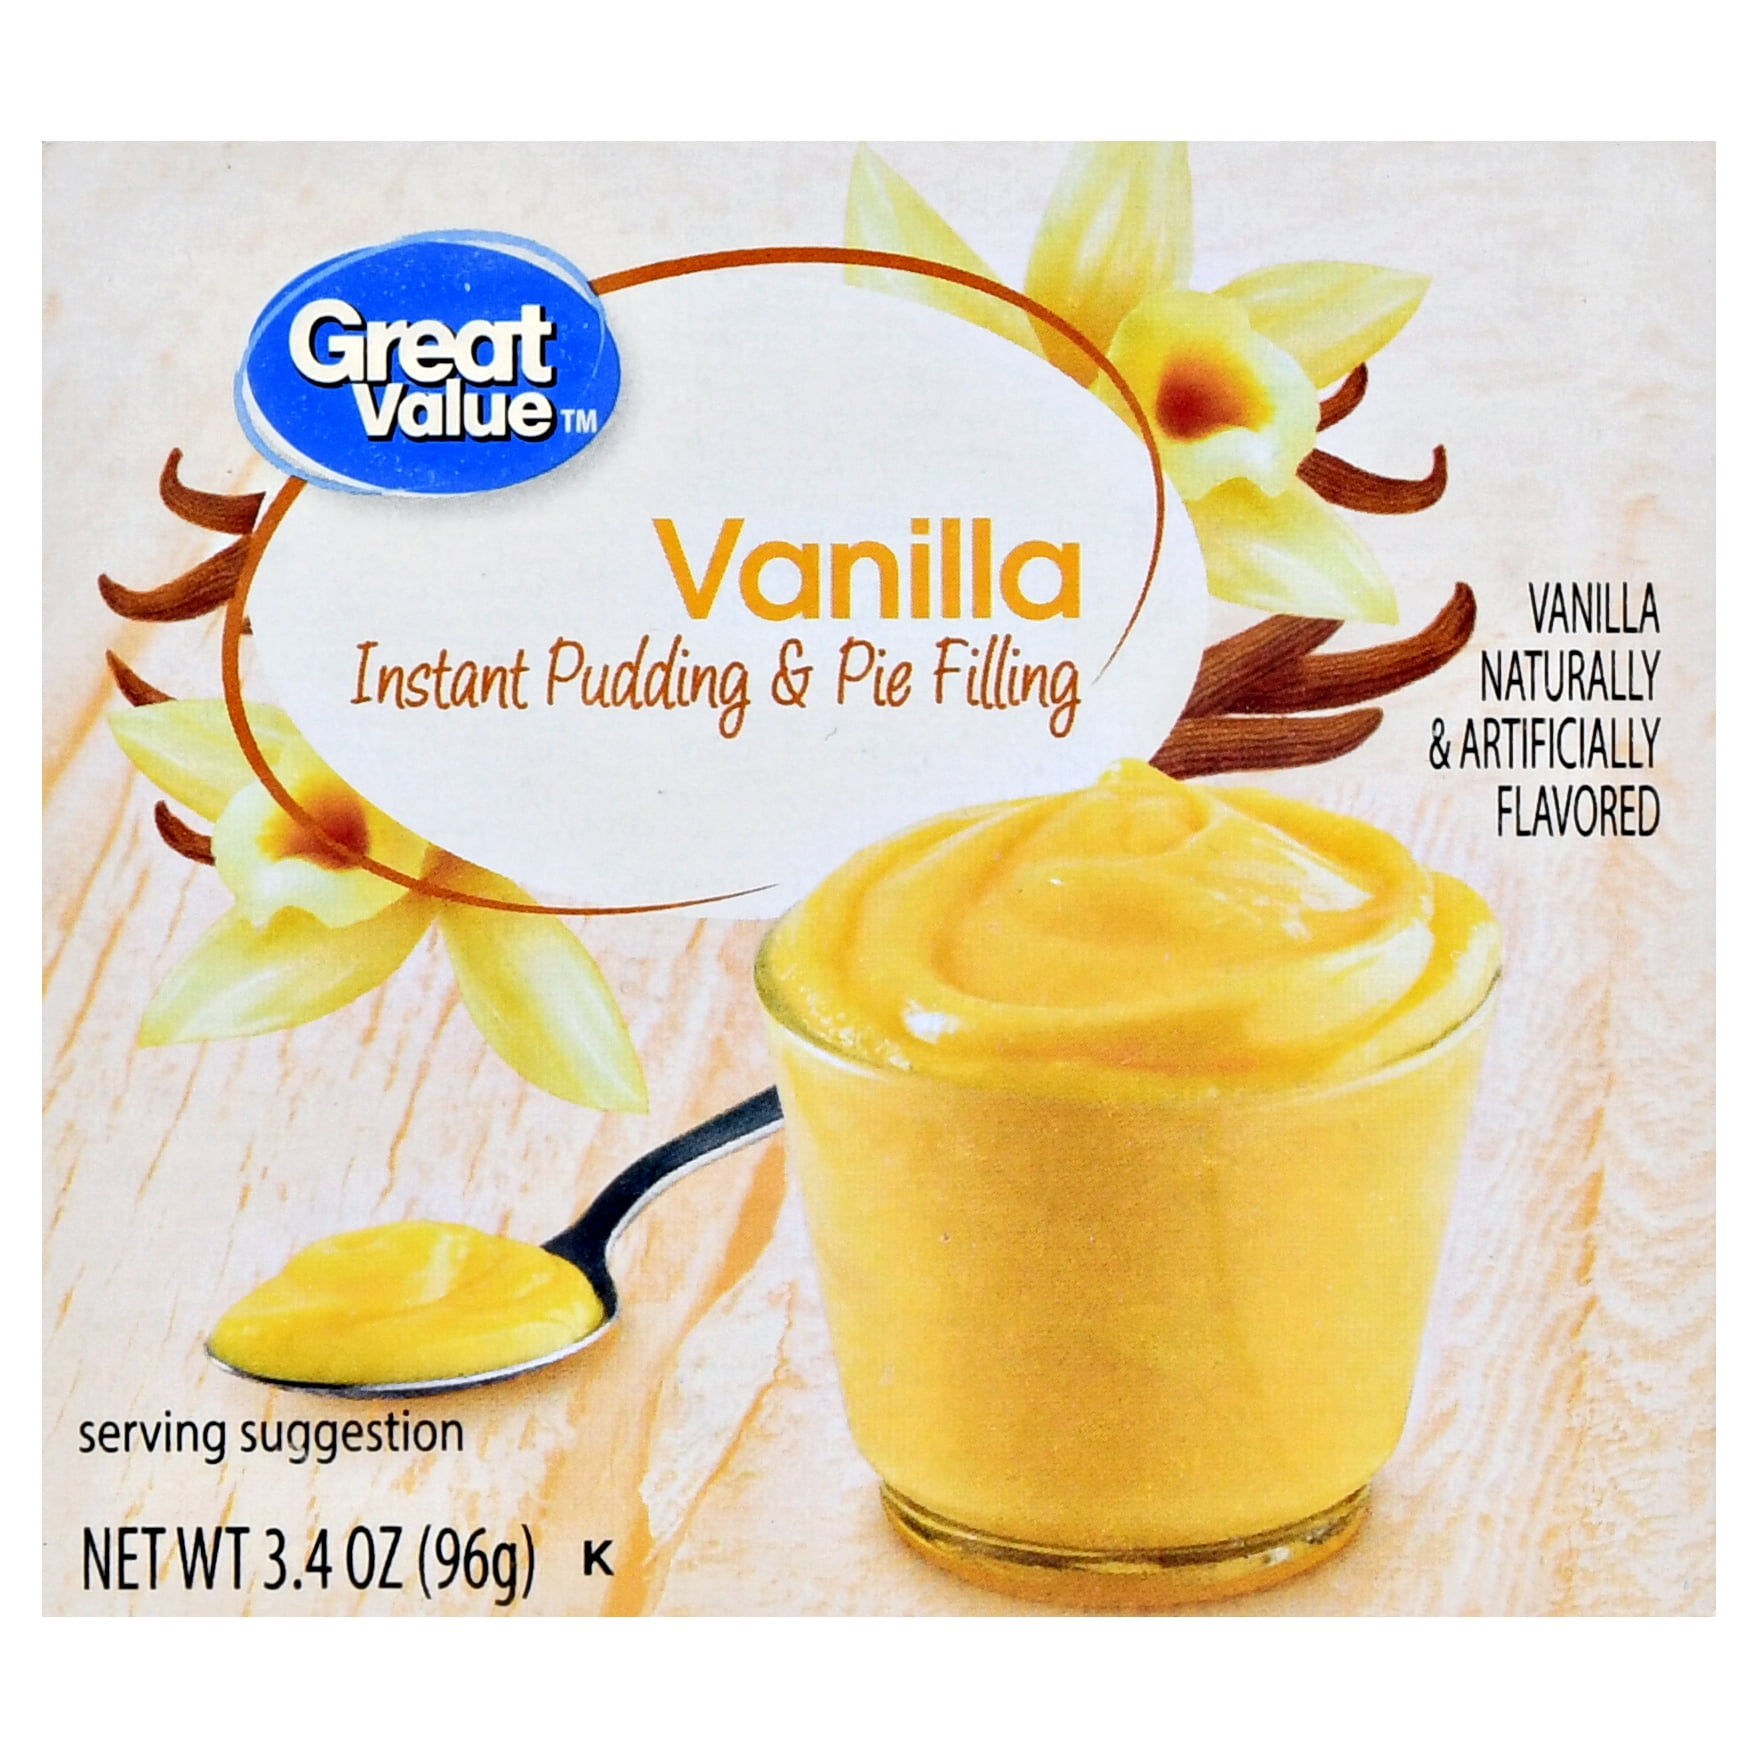 Great Value Vanilla Instant Pudding & Pie Filling, 3.4 oz